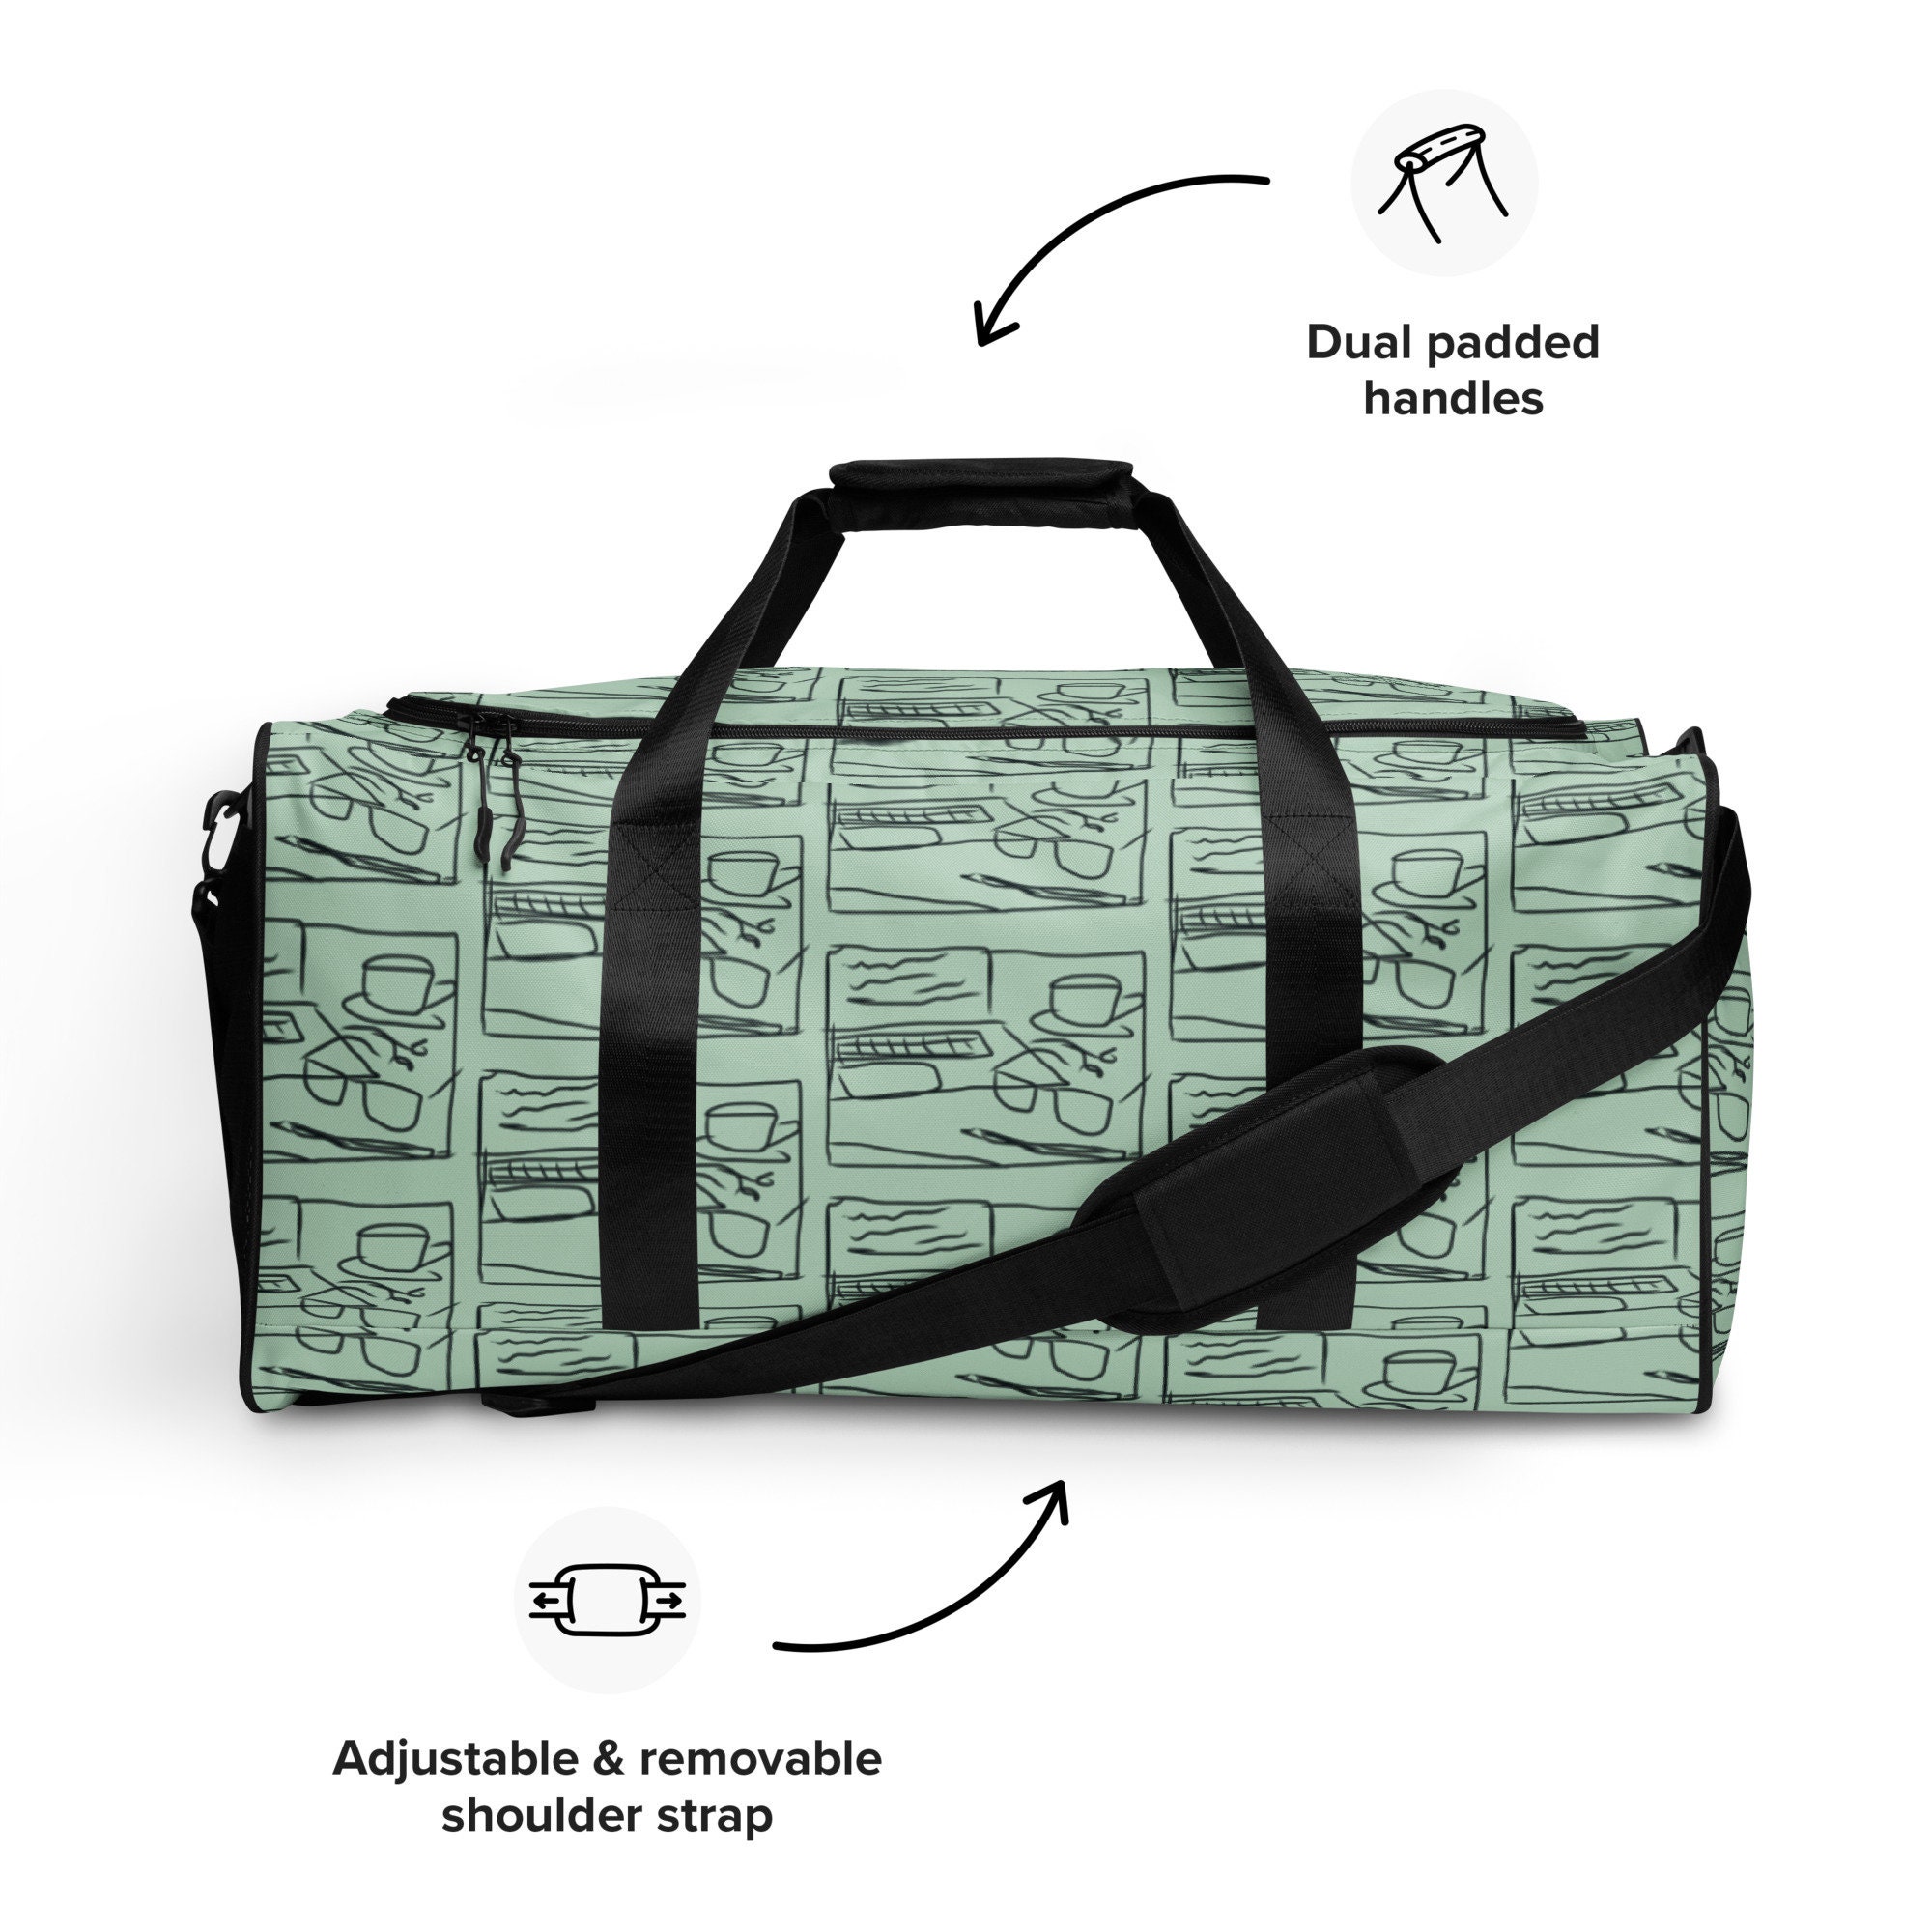 Cute Duffel Personalized Check Shoulder Bag Gift for Her Mint Overnight Bag Monogrammed Travel Bag Tassen & portemonnees Bagage & Reizen Weekendtassen Personalized Mint Check Travel Bag 